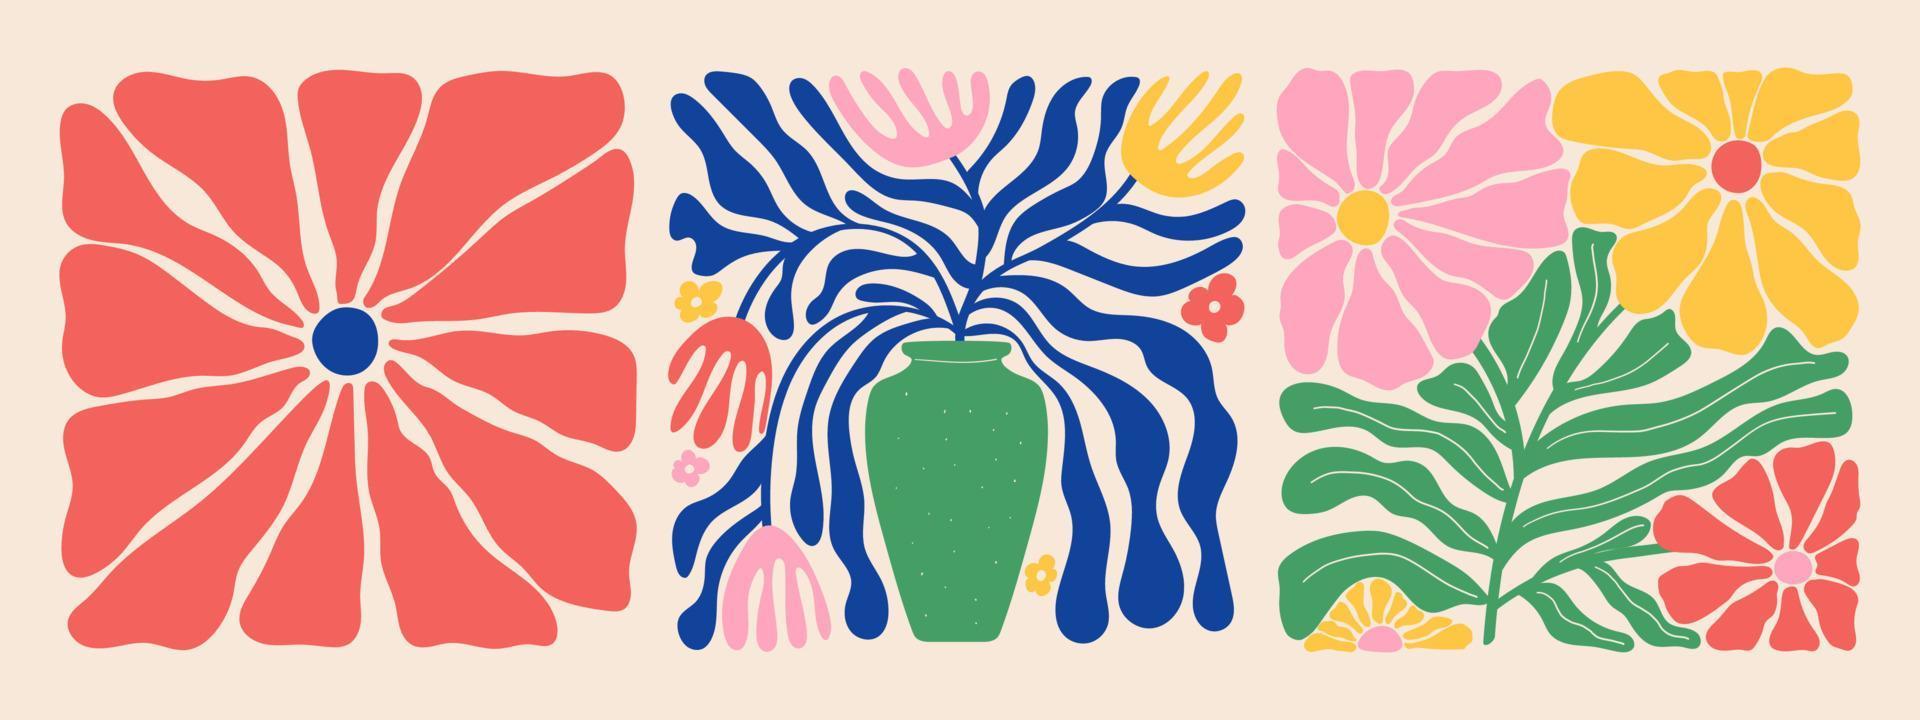 groovy abstrato orgânico plantar formas arte definir. Matisse floral cartazes dentro na moda retro anos 60 Anos 70 estilo. vetor